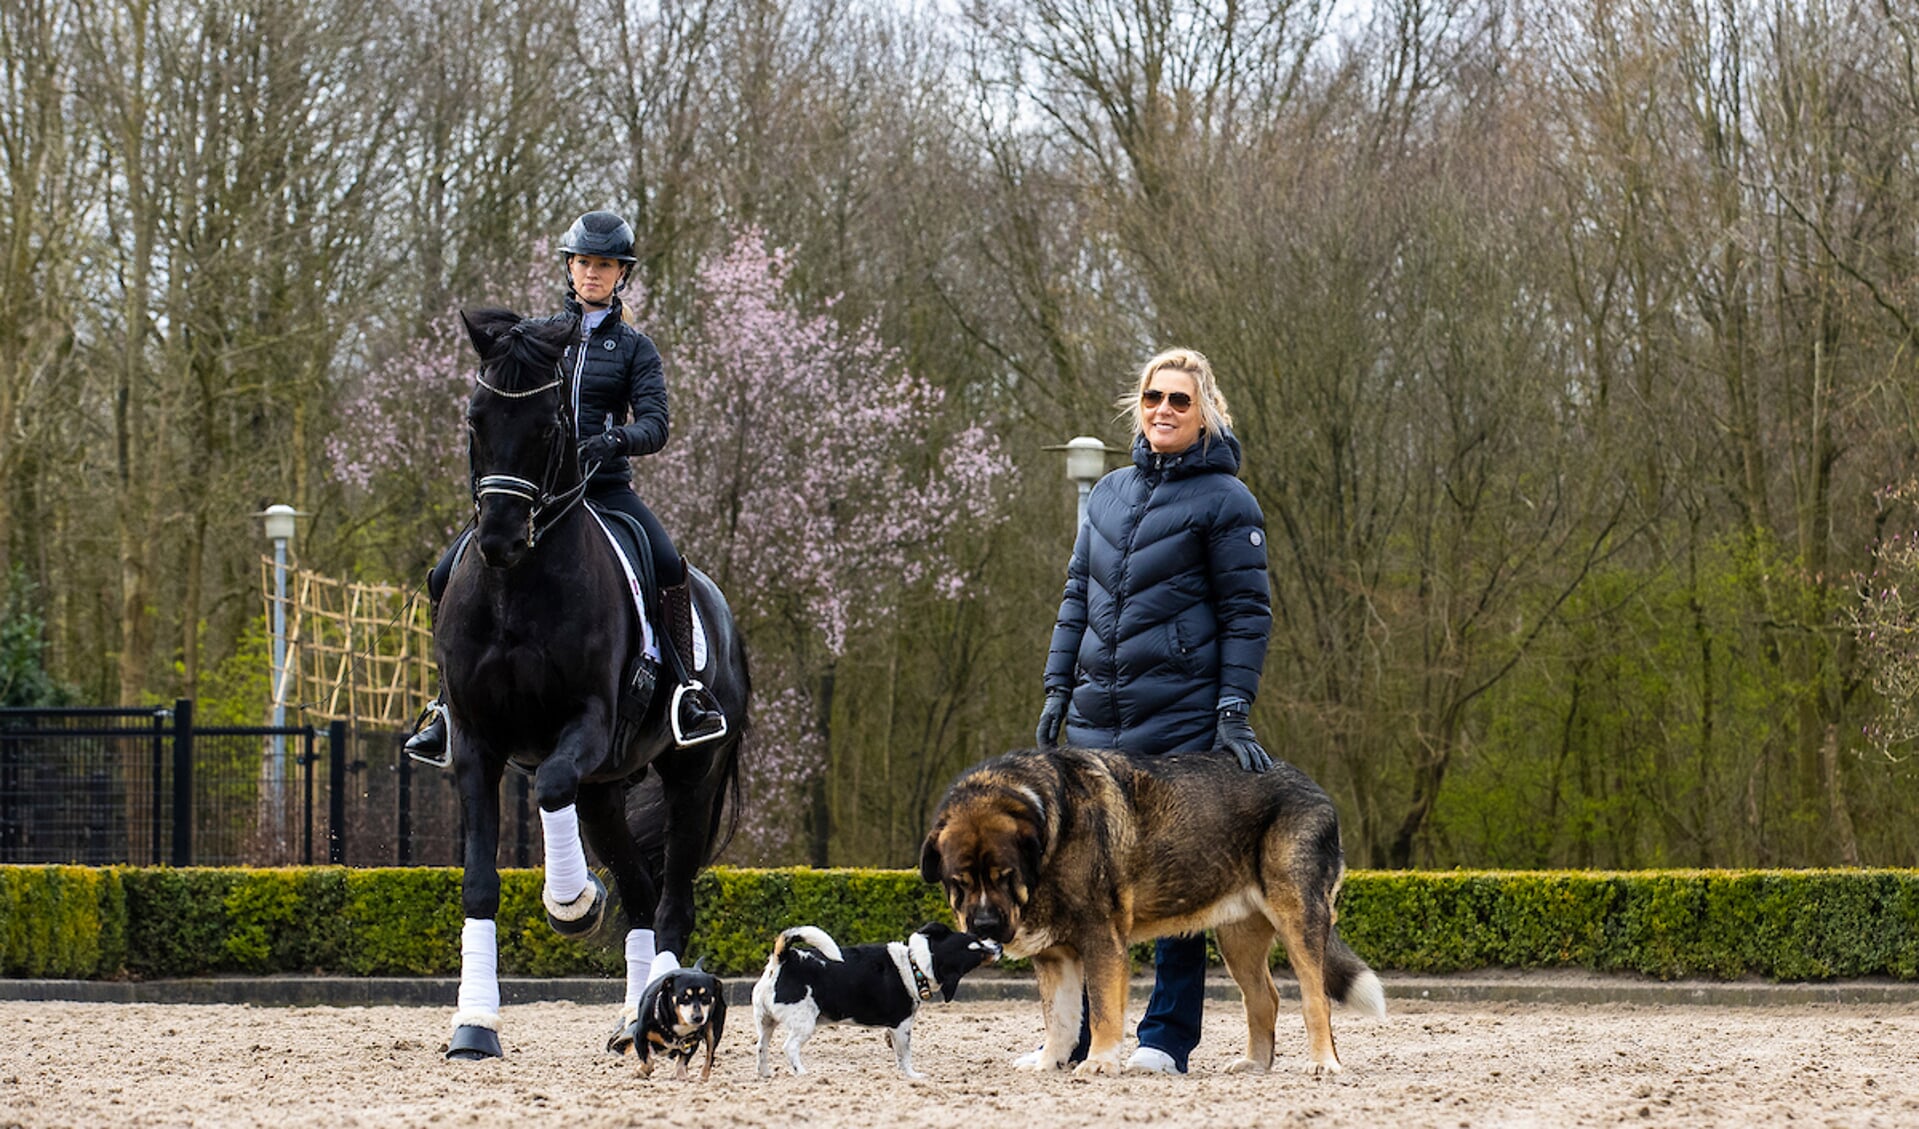 Charlotte Fry and Don Joe en Anne van Olst bij Van Olst Horses 
© DigiShots